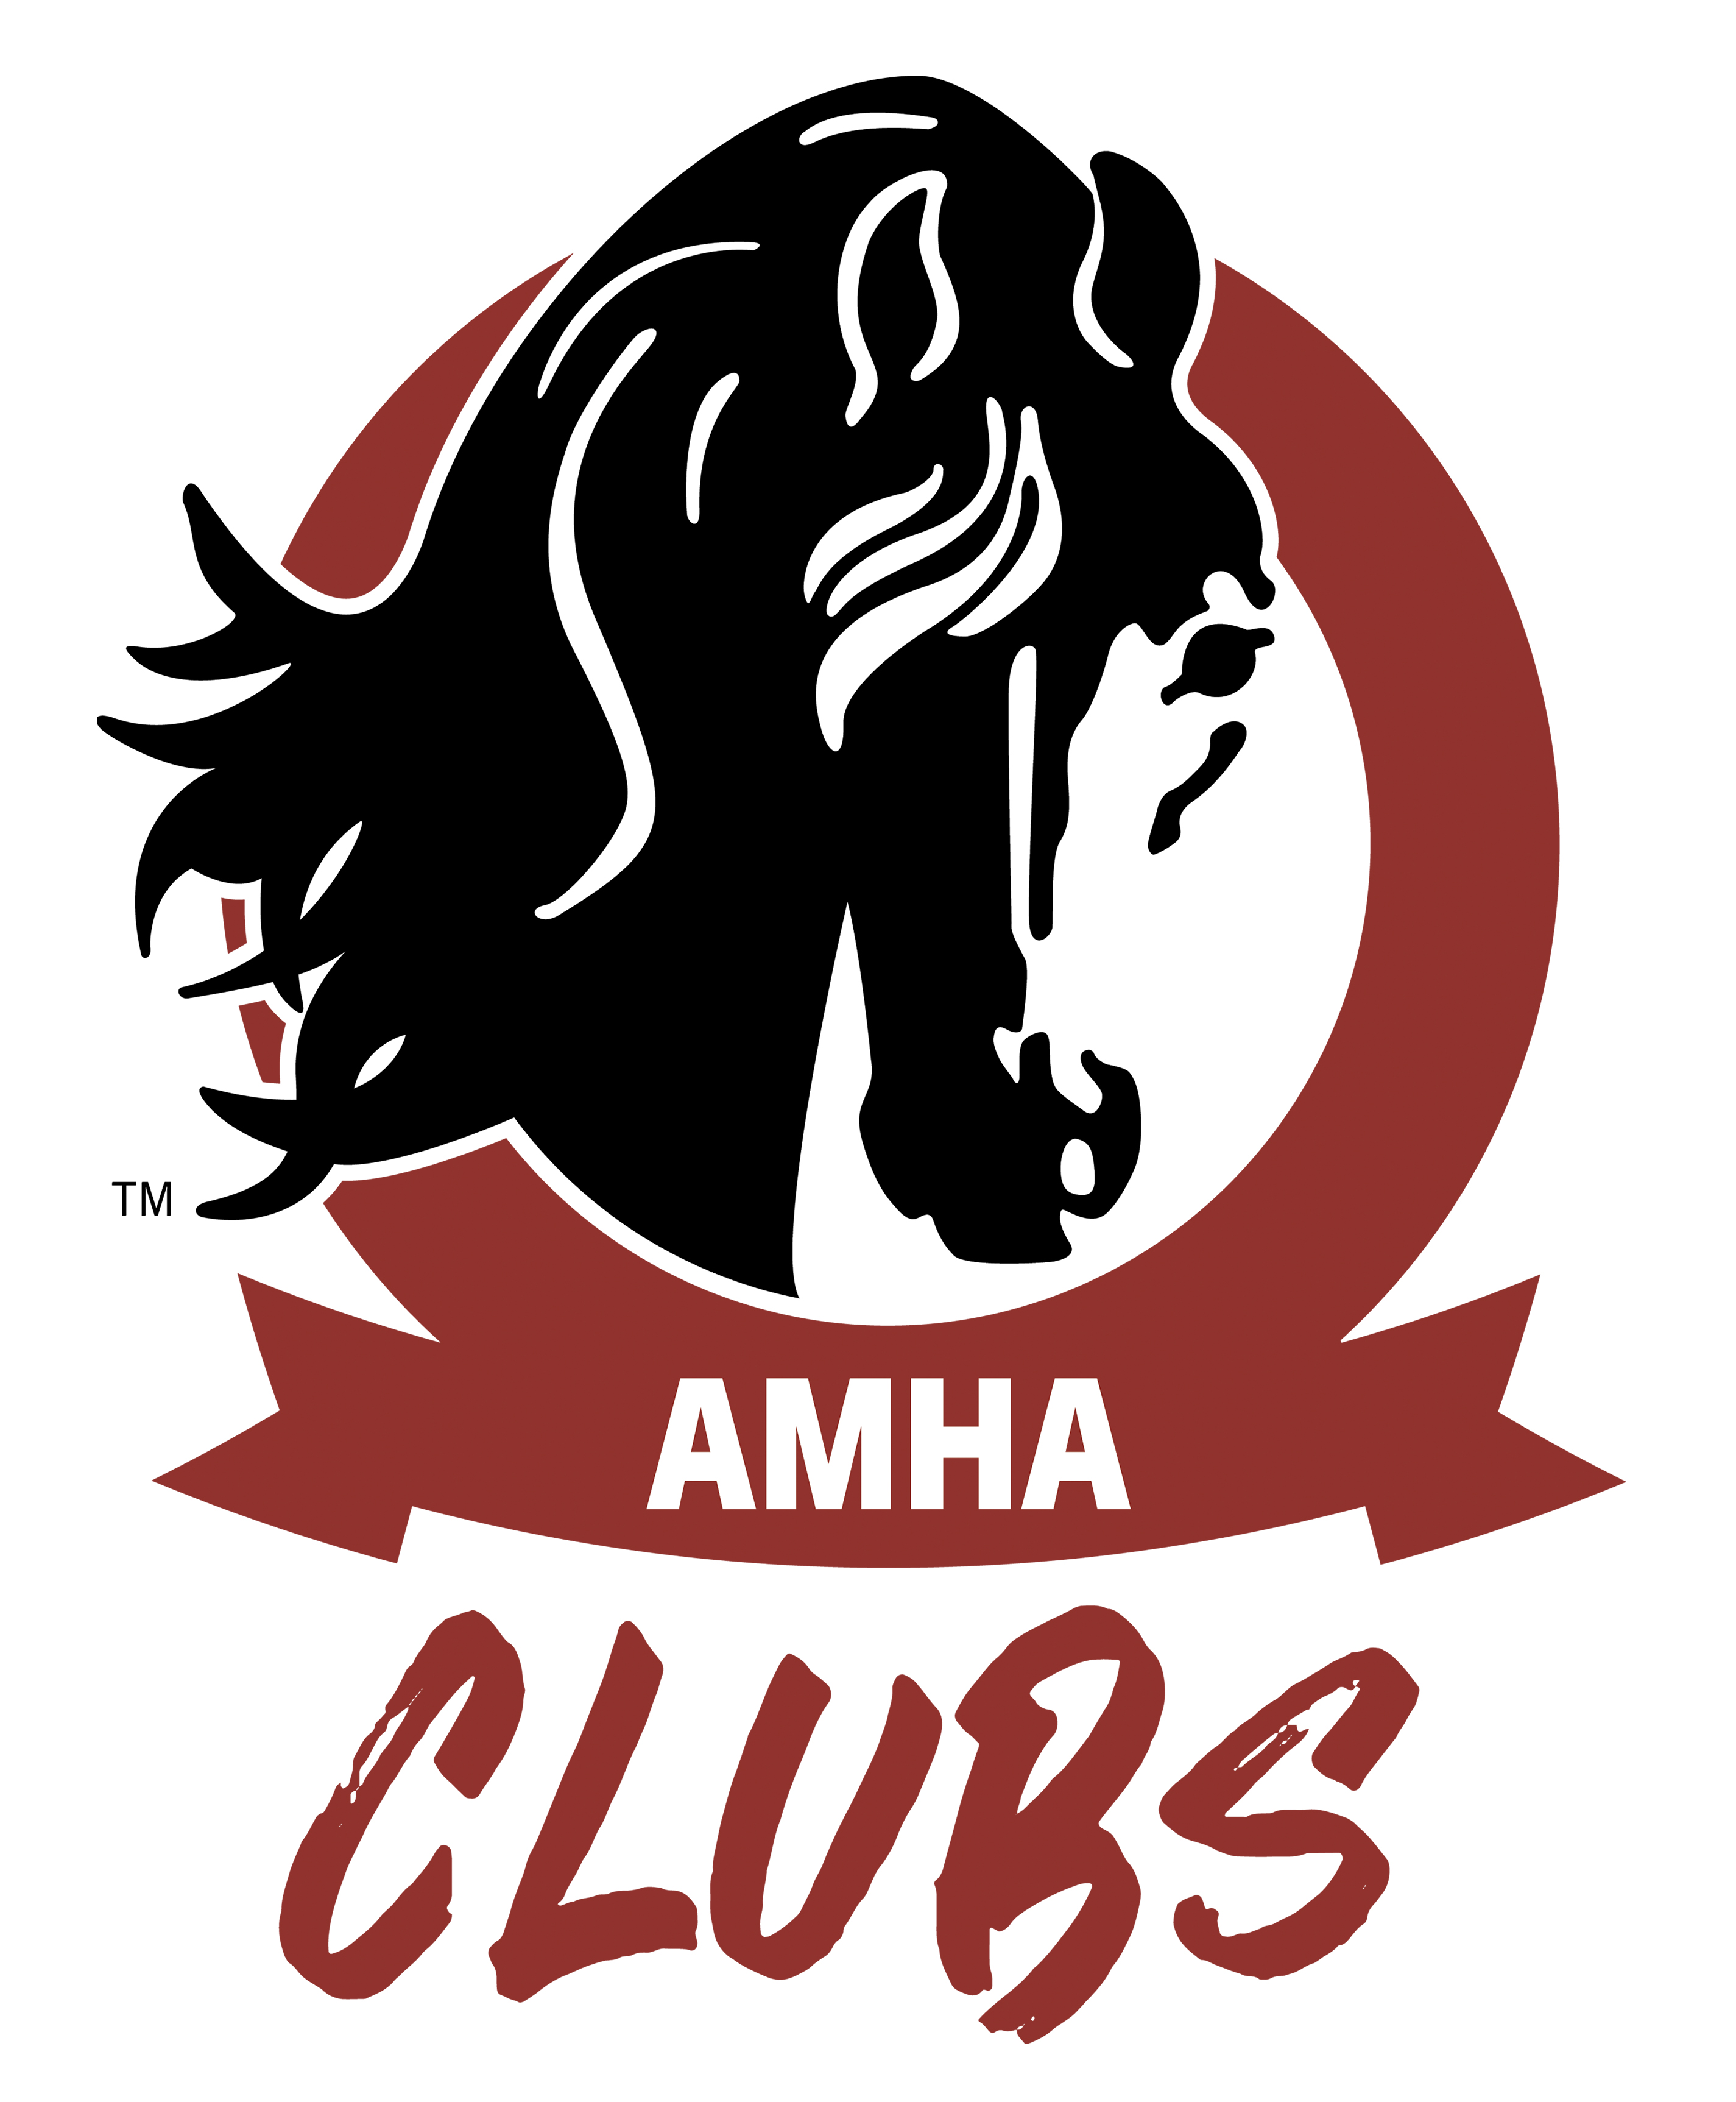 news_amhaprogram_logos_clubs.jpg